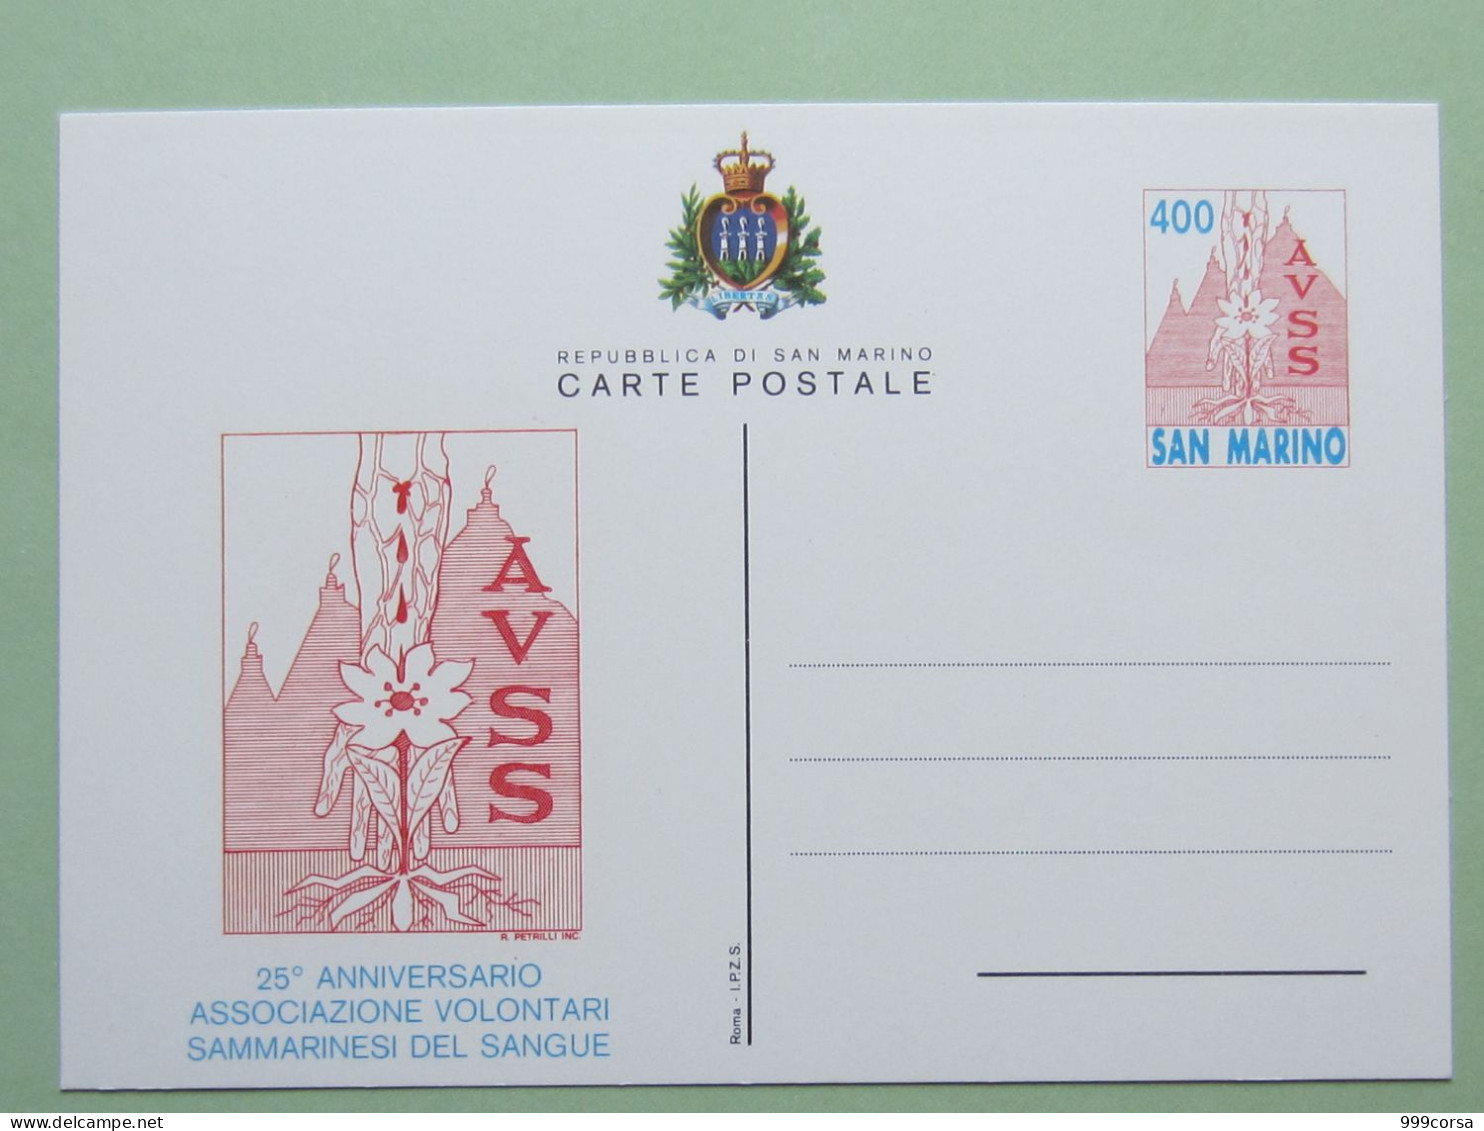 San Marino,lotto Interi Postali (busta Asiago Arte Filatelica,cart.post.Alfa Romeo 75°ann.,aerogramma Olimphilex 1985,ec - Entiers Postaux